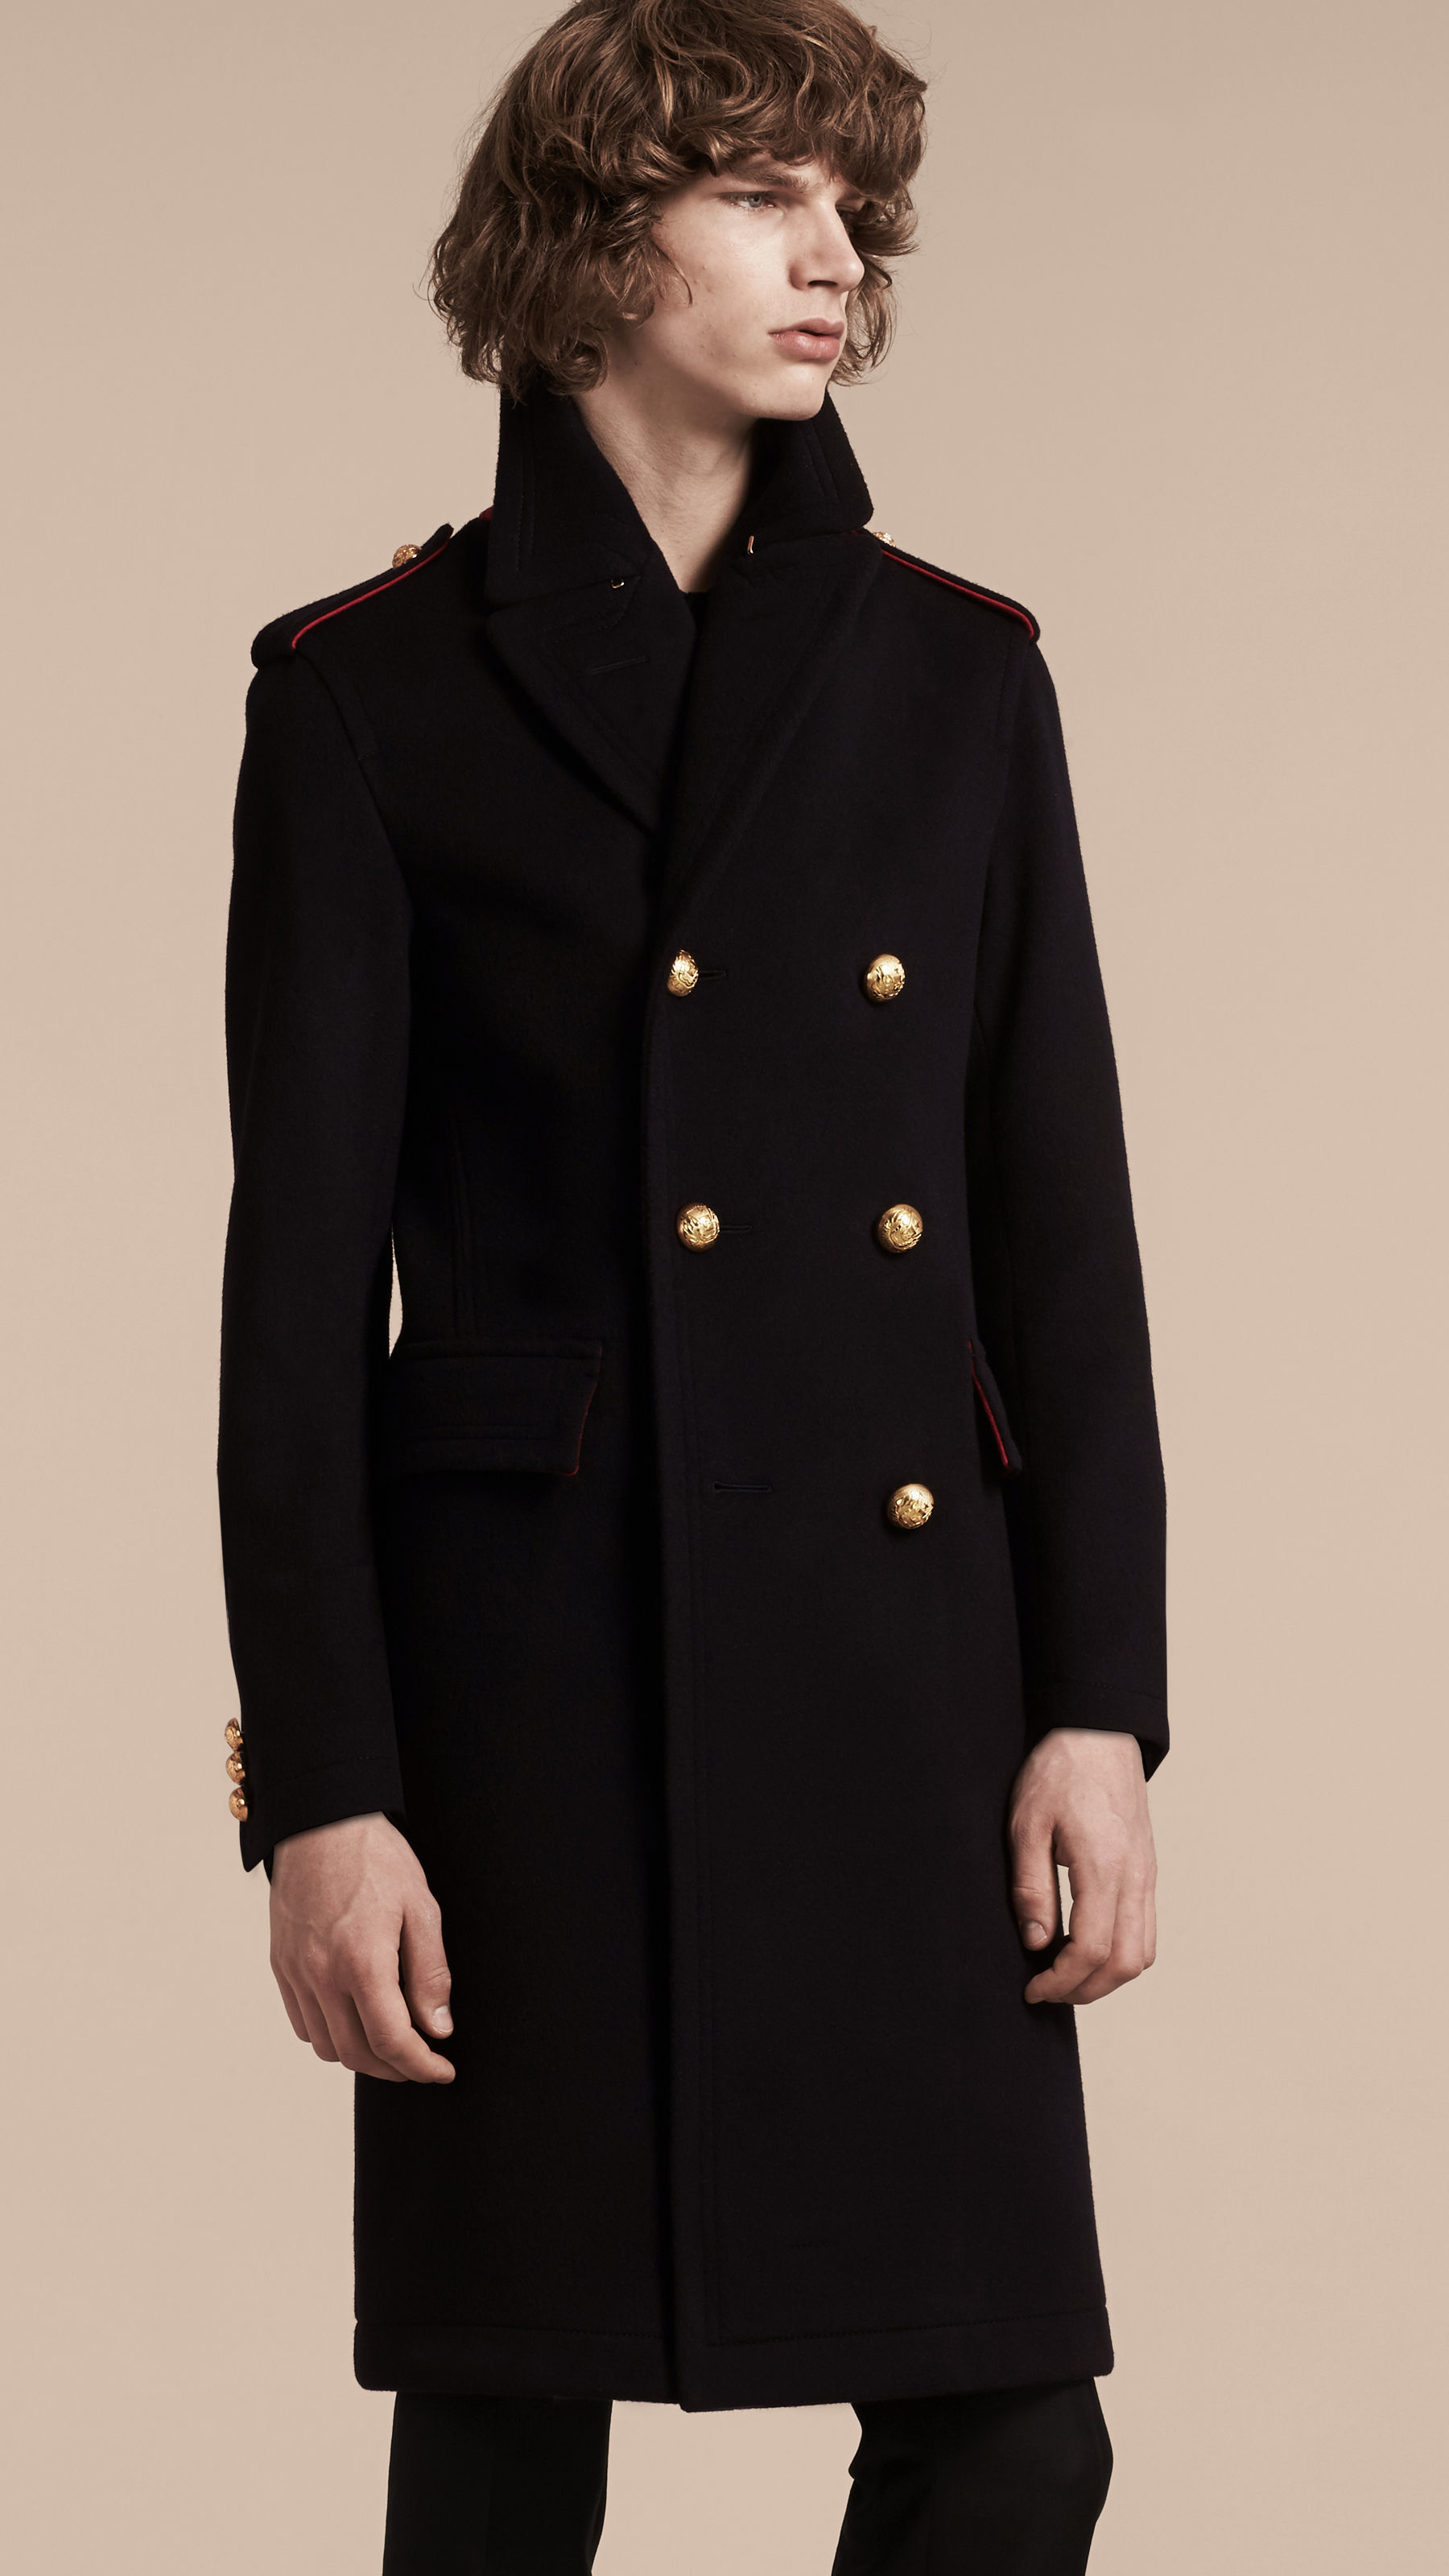 Wool Military Overcoat in Navy 